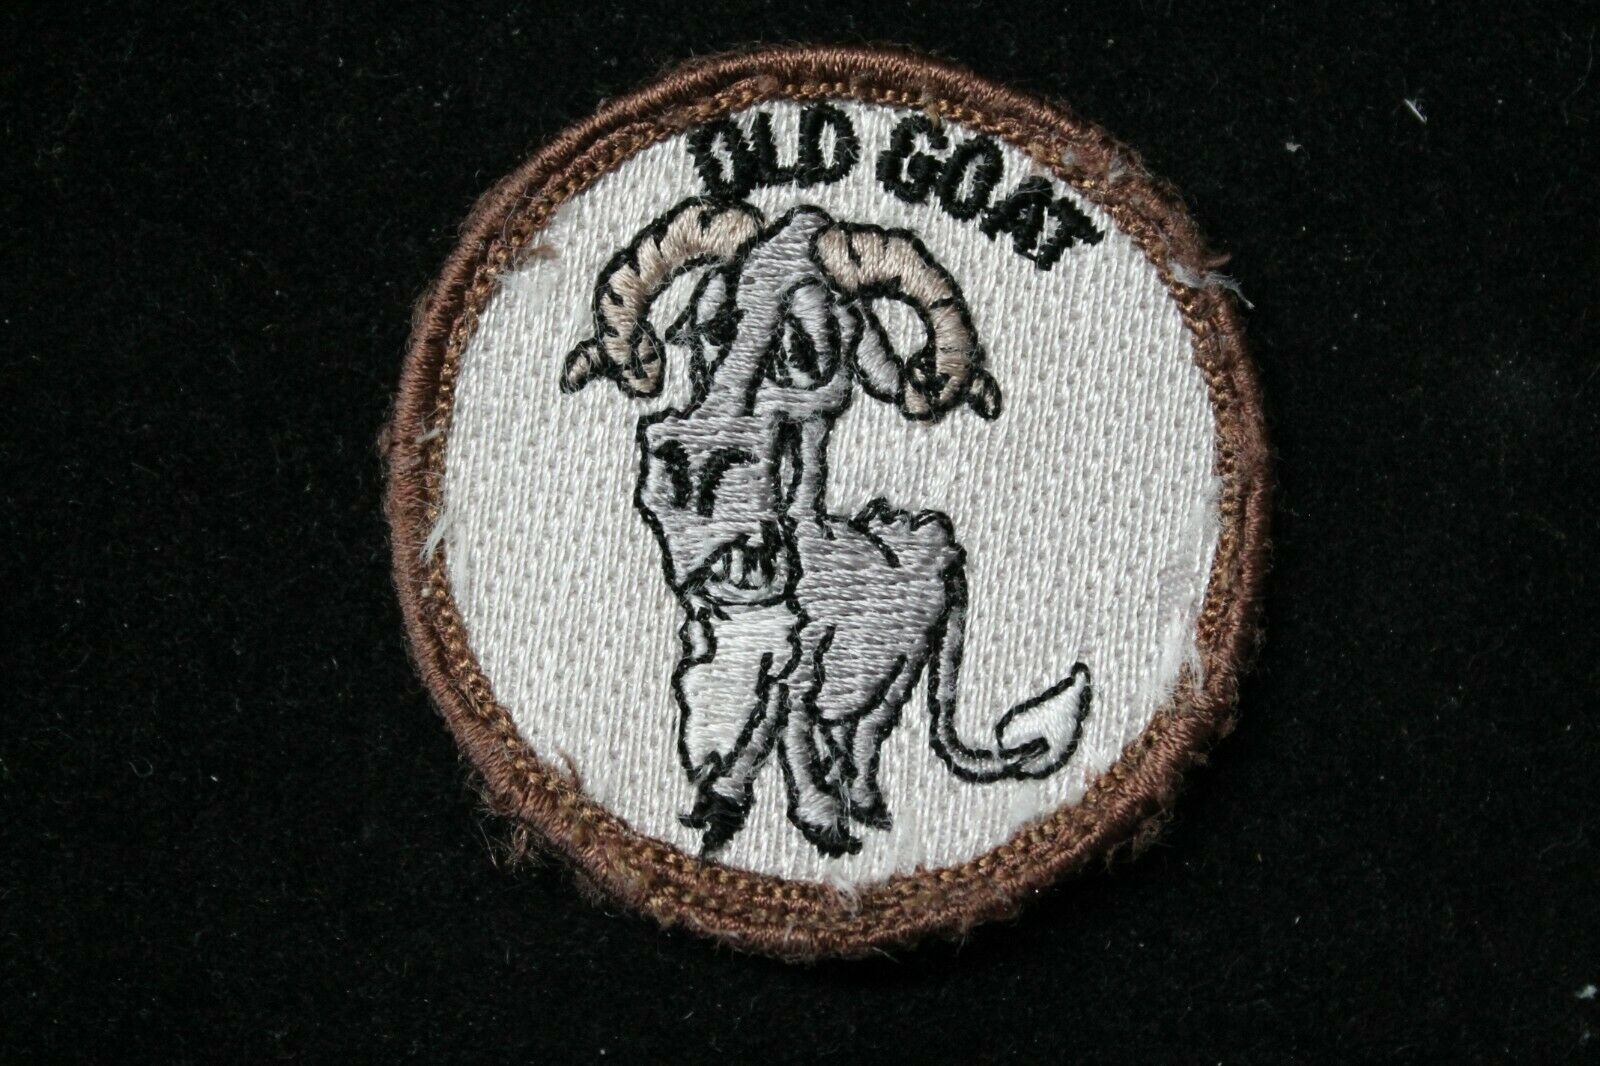 Boy / Cub Scout "old Goat Patrol" Patch - Bsa Senior Rocker